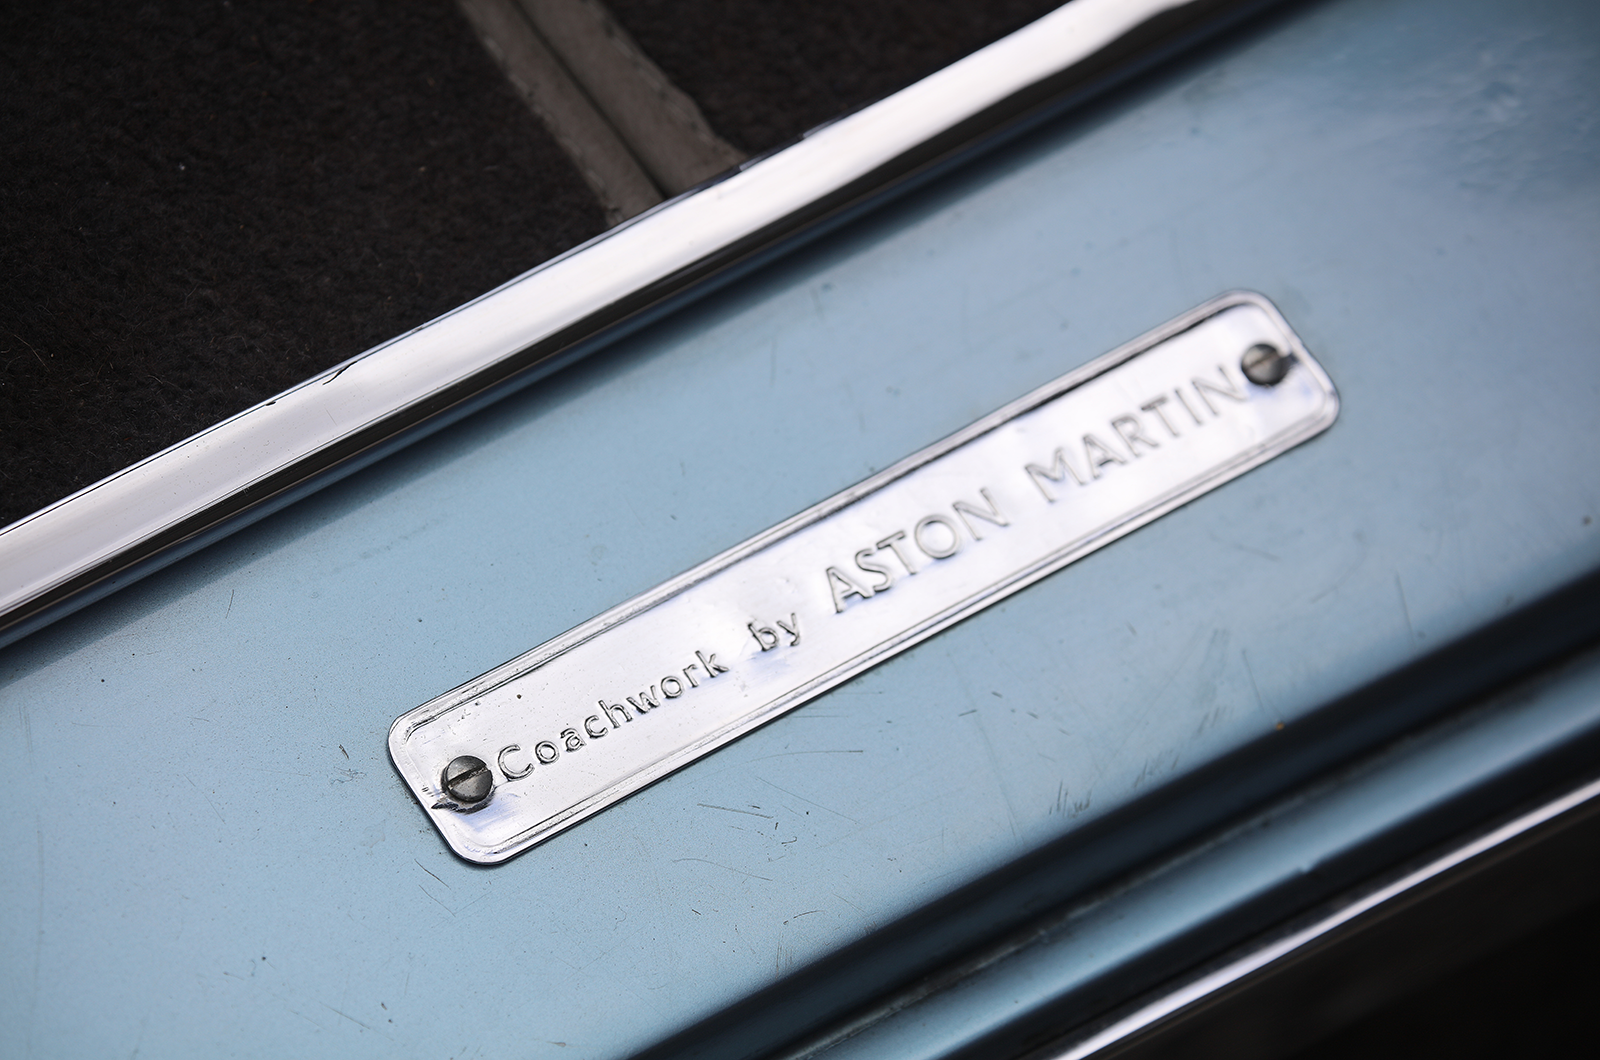 Classic & Sports Car – Aston Martin DB1: inherited beauty